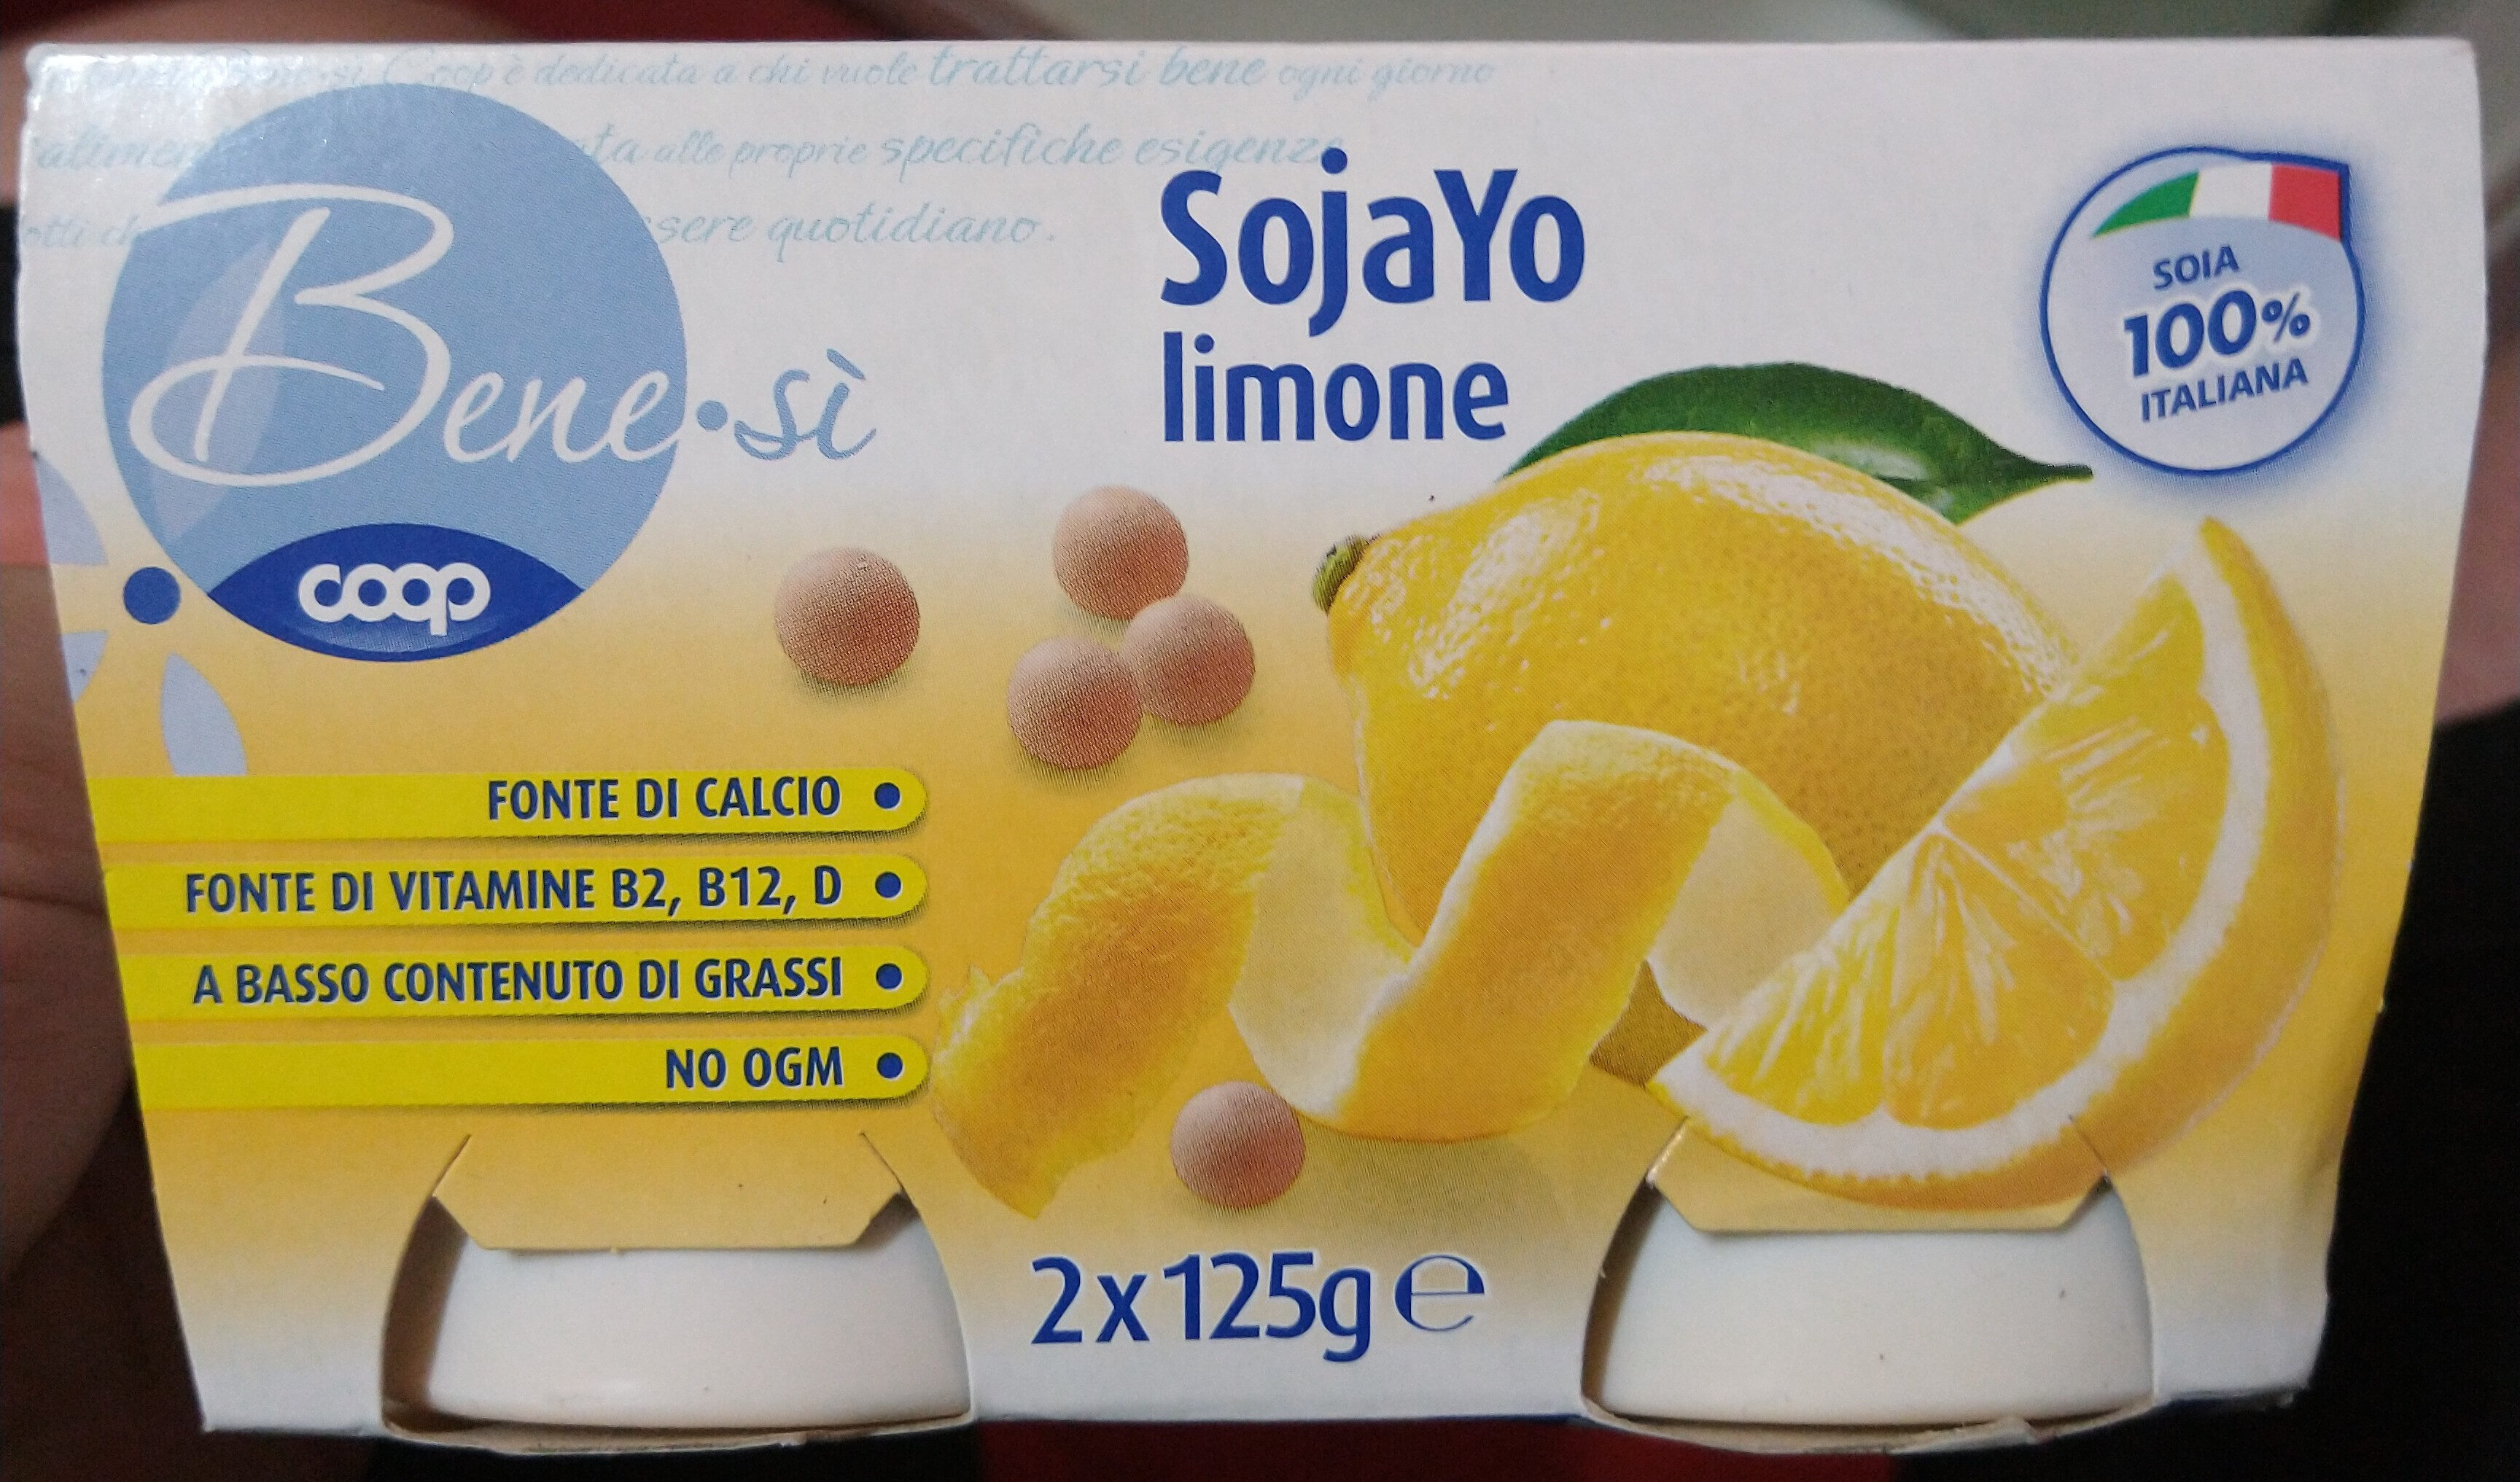 SojaYo limone - Bene Sì - Producto - it